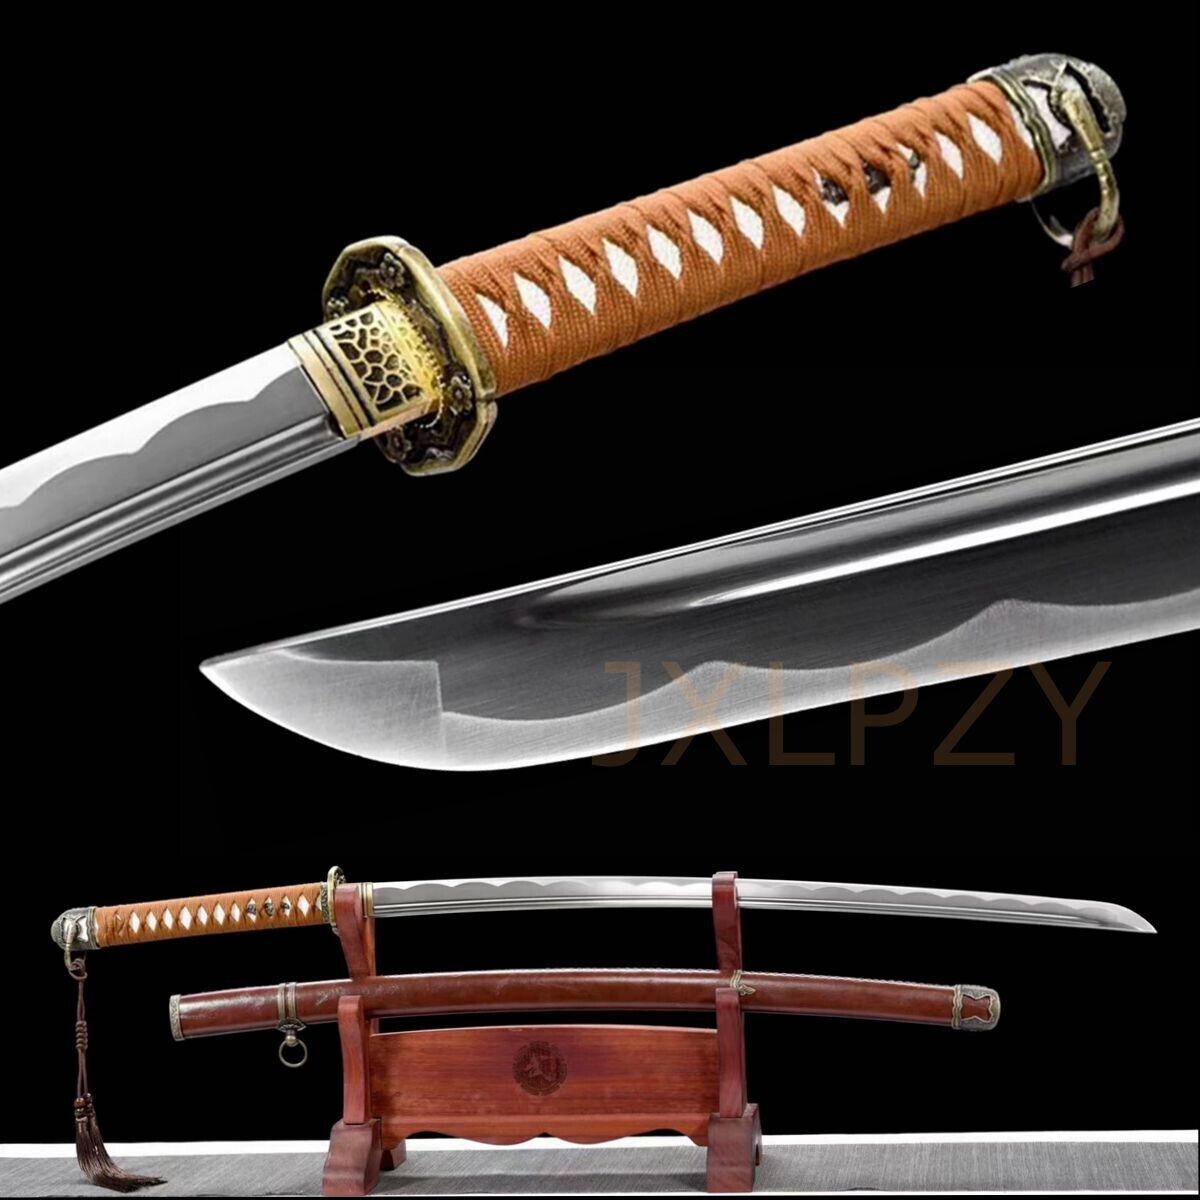 Handmade Military Japanese Command Sword Samurai Katana 1095 Carbon Steel Blade